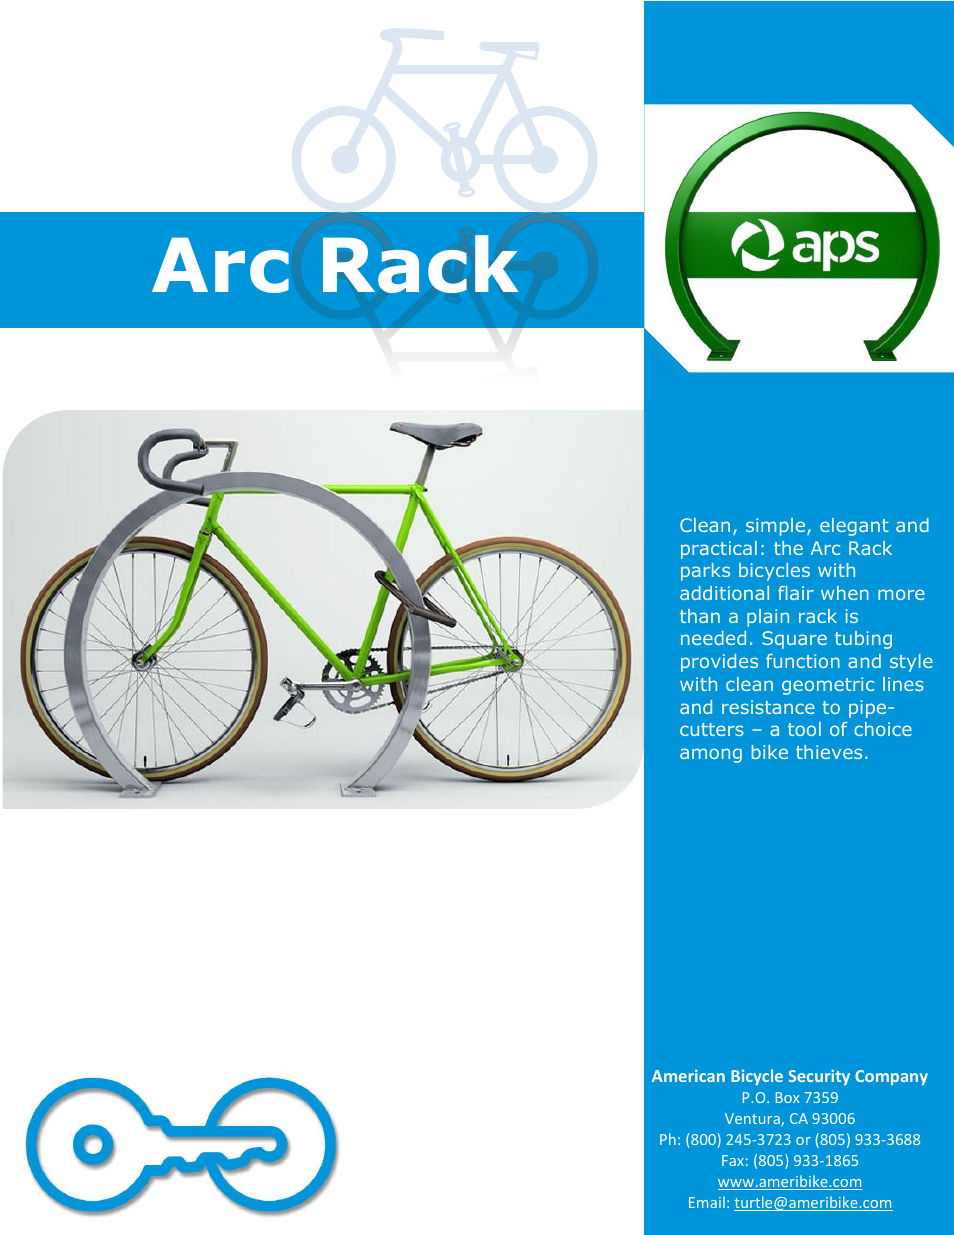 Arc Rack